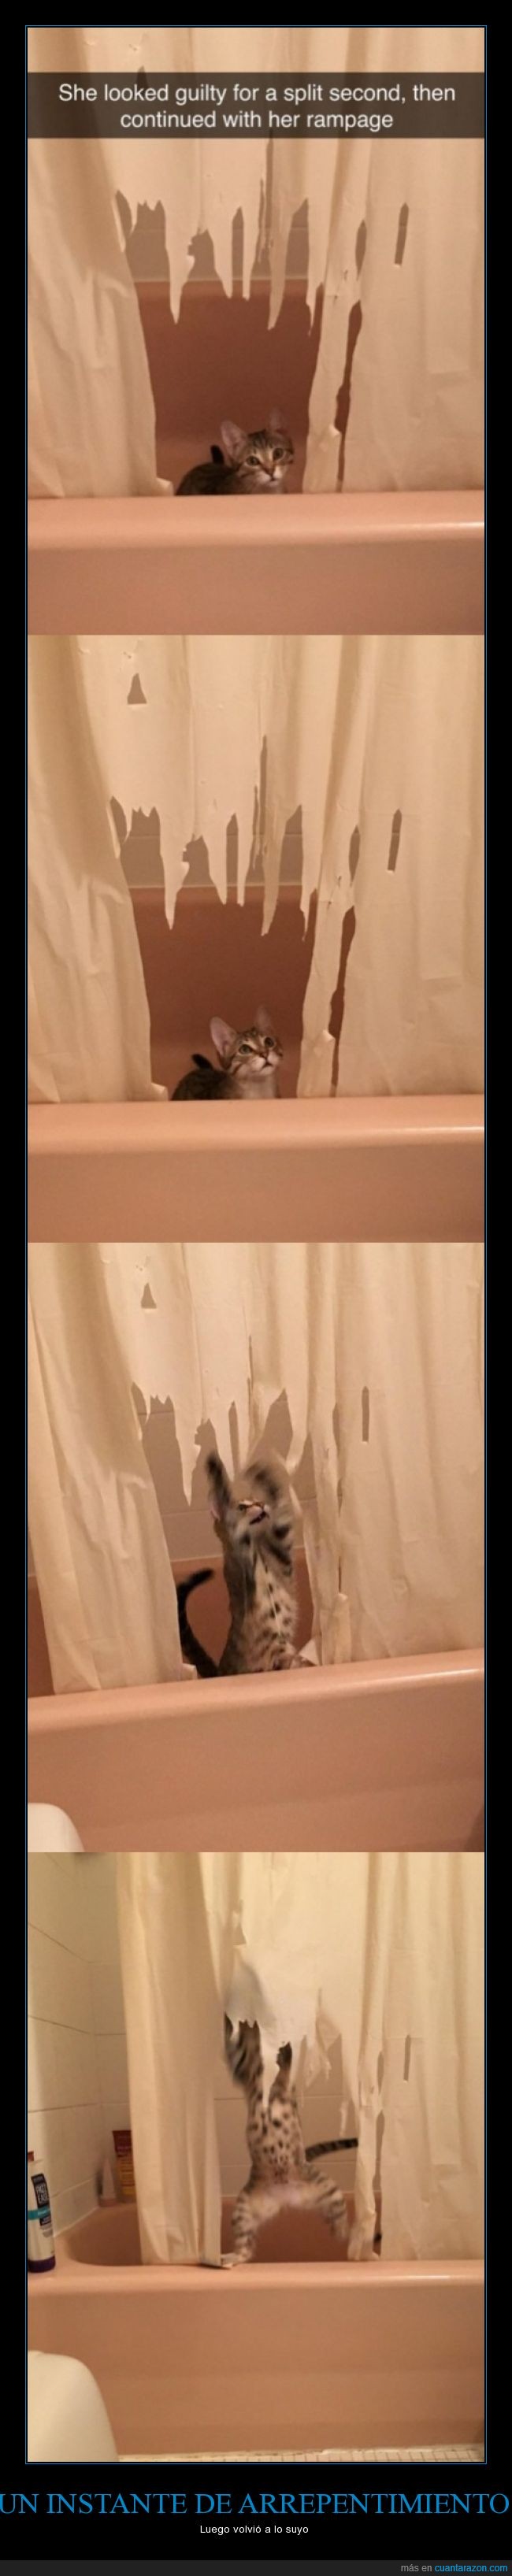 gato,romper,destrozar,cortina,baño,bañera